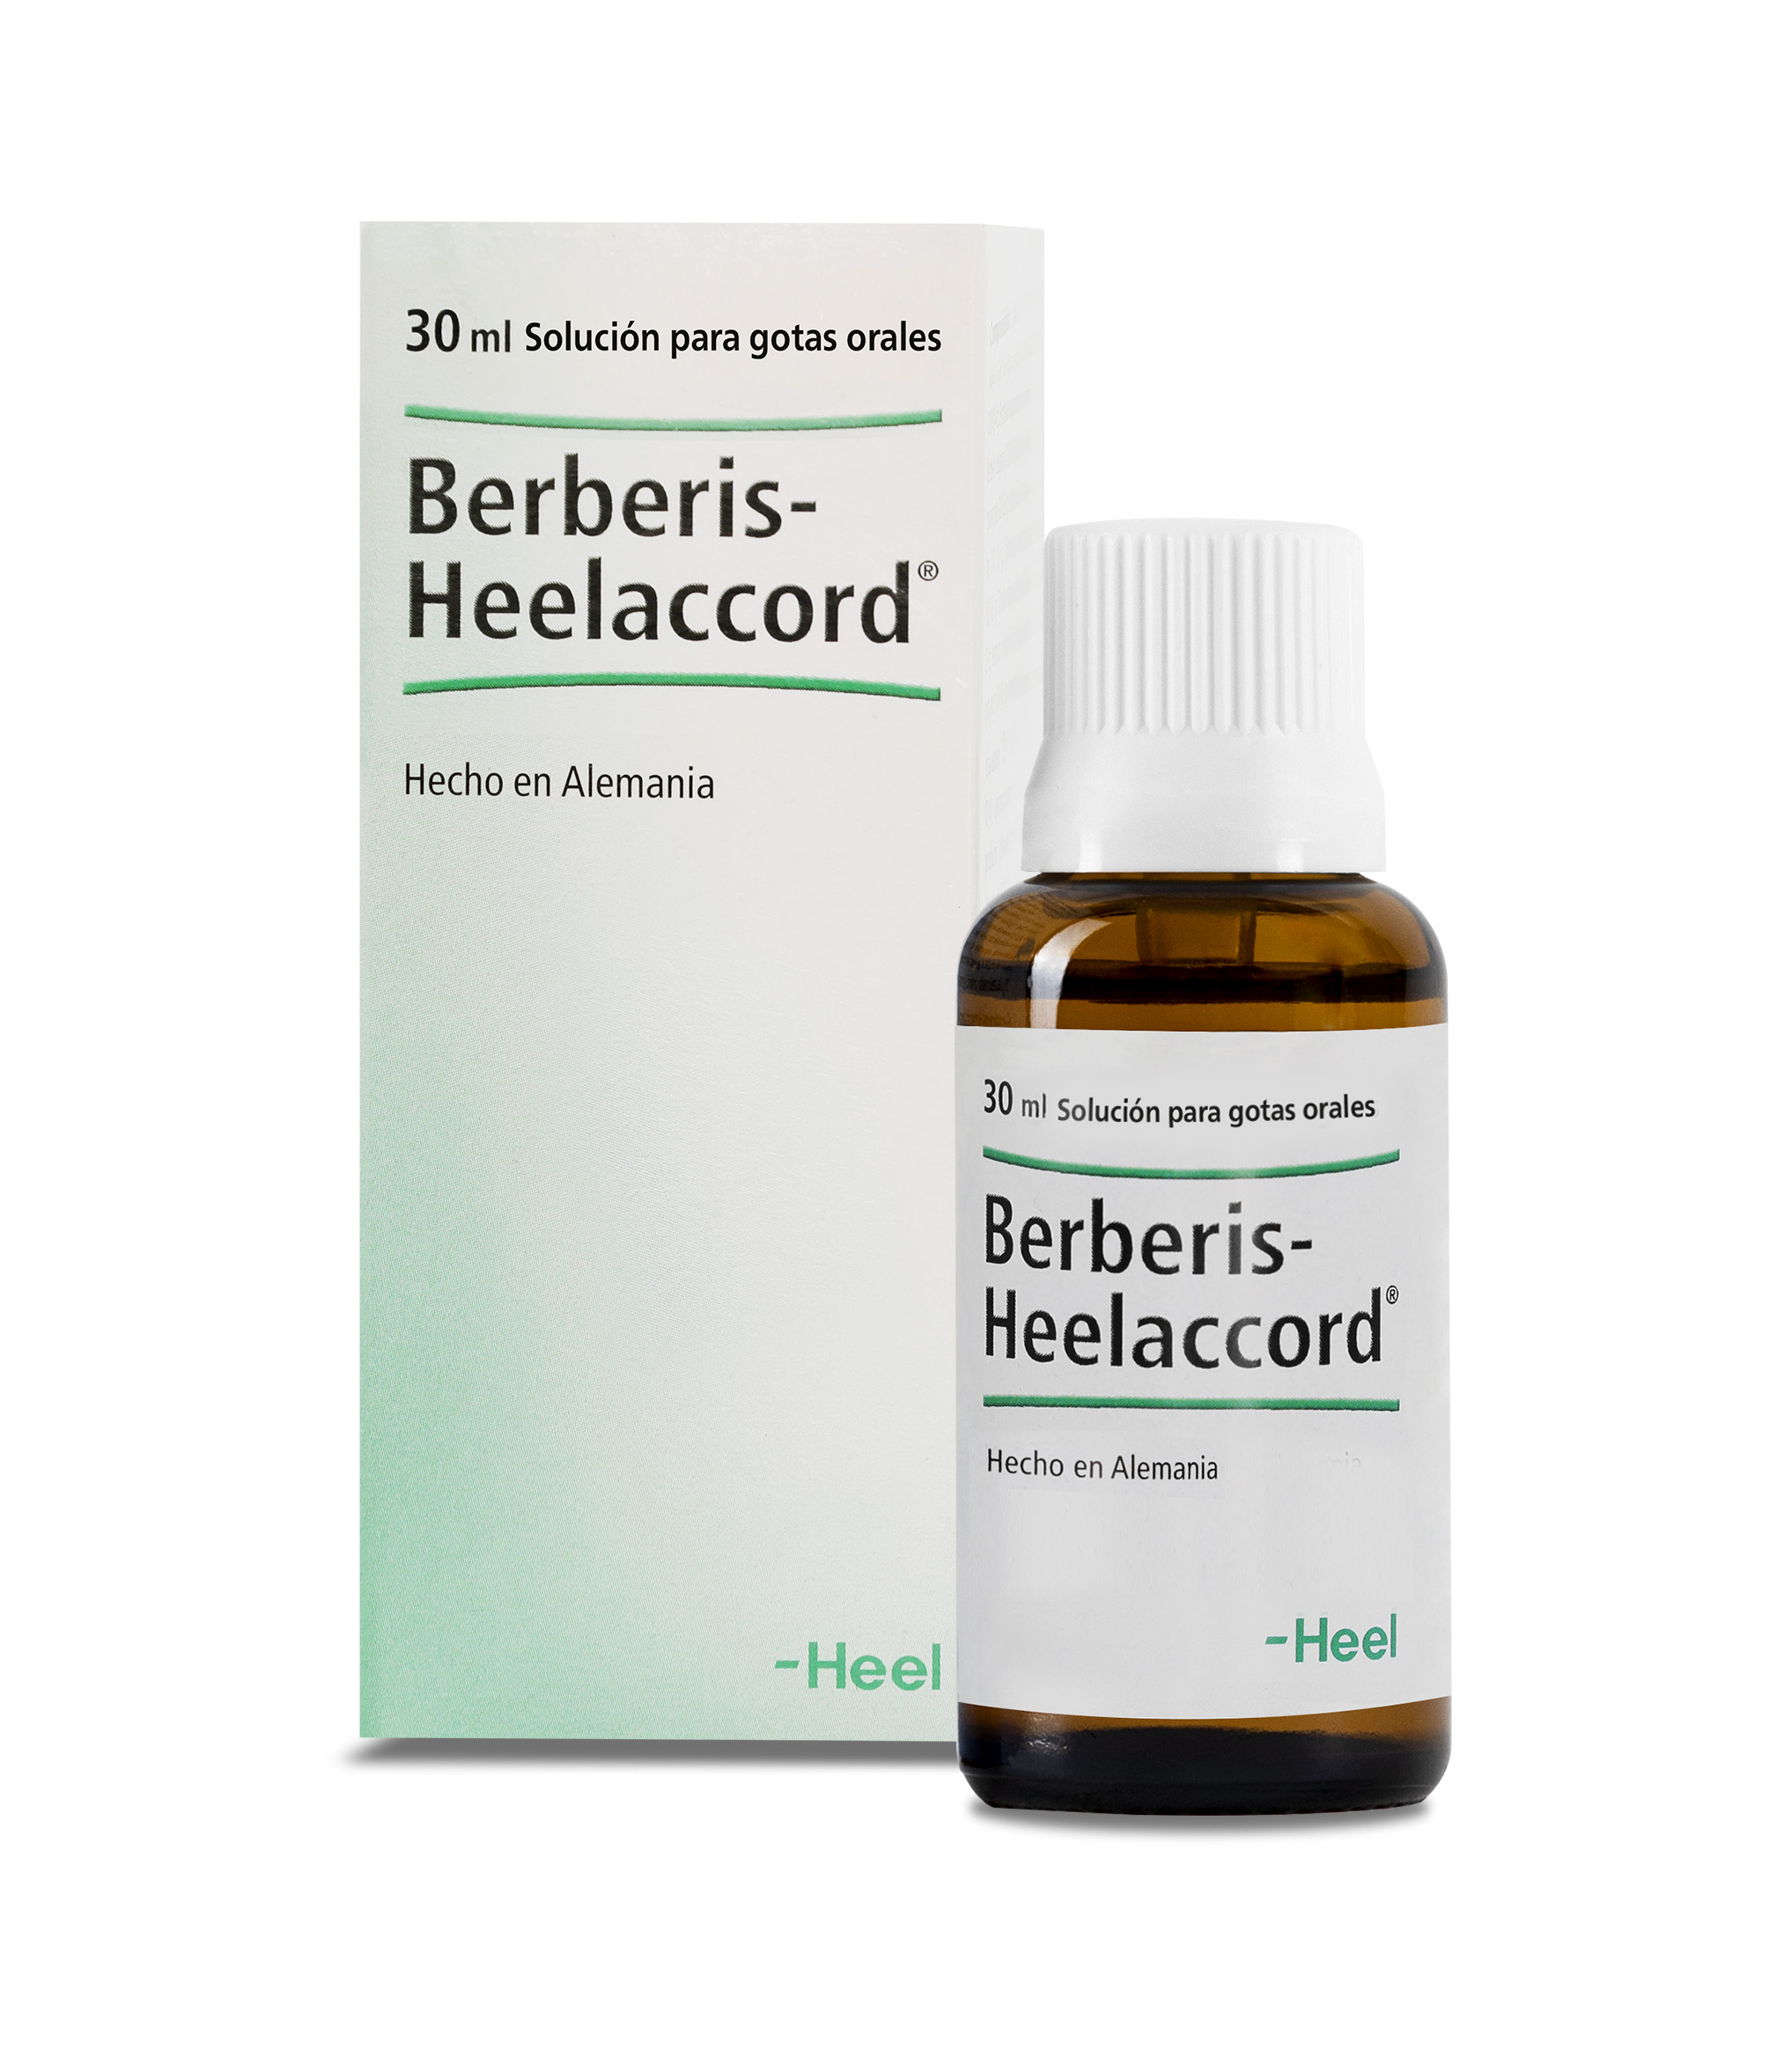 Berberis-Heelaccord® Gotas